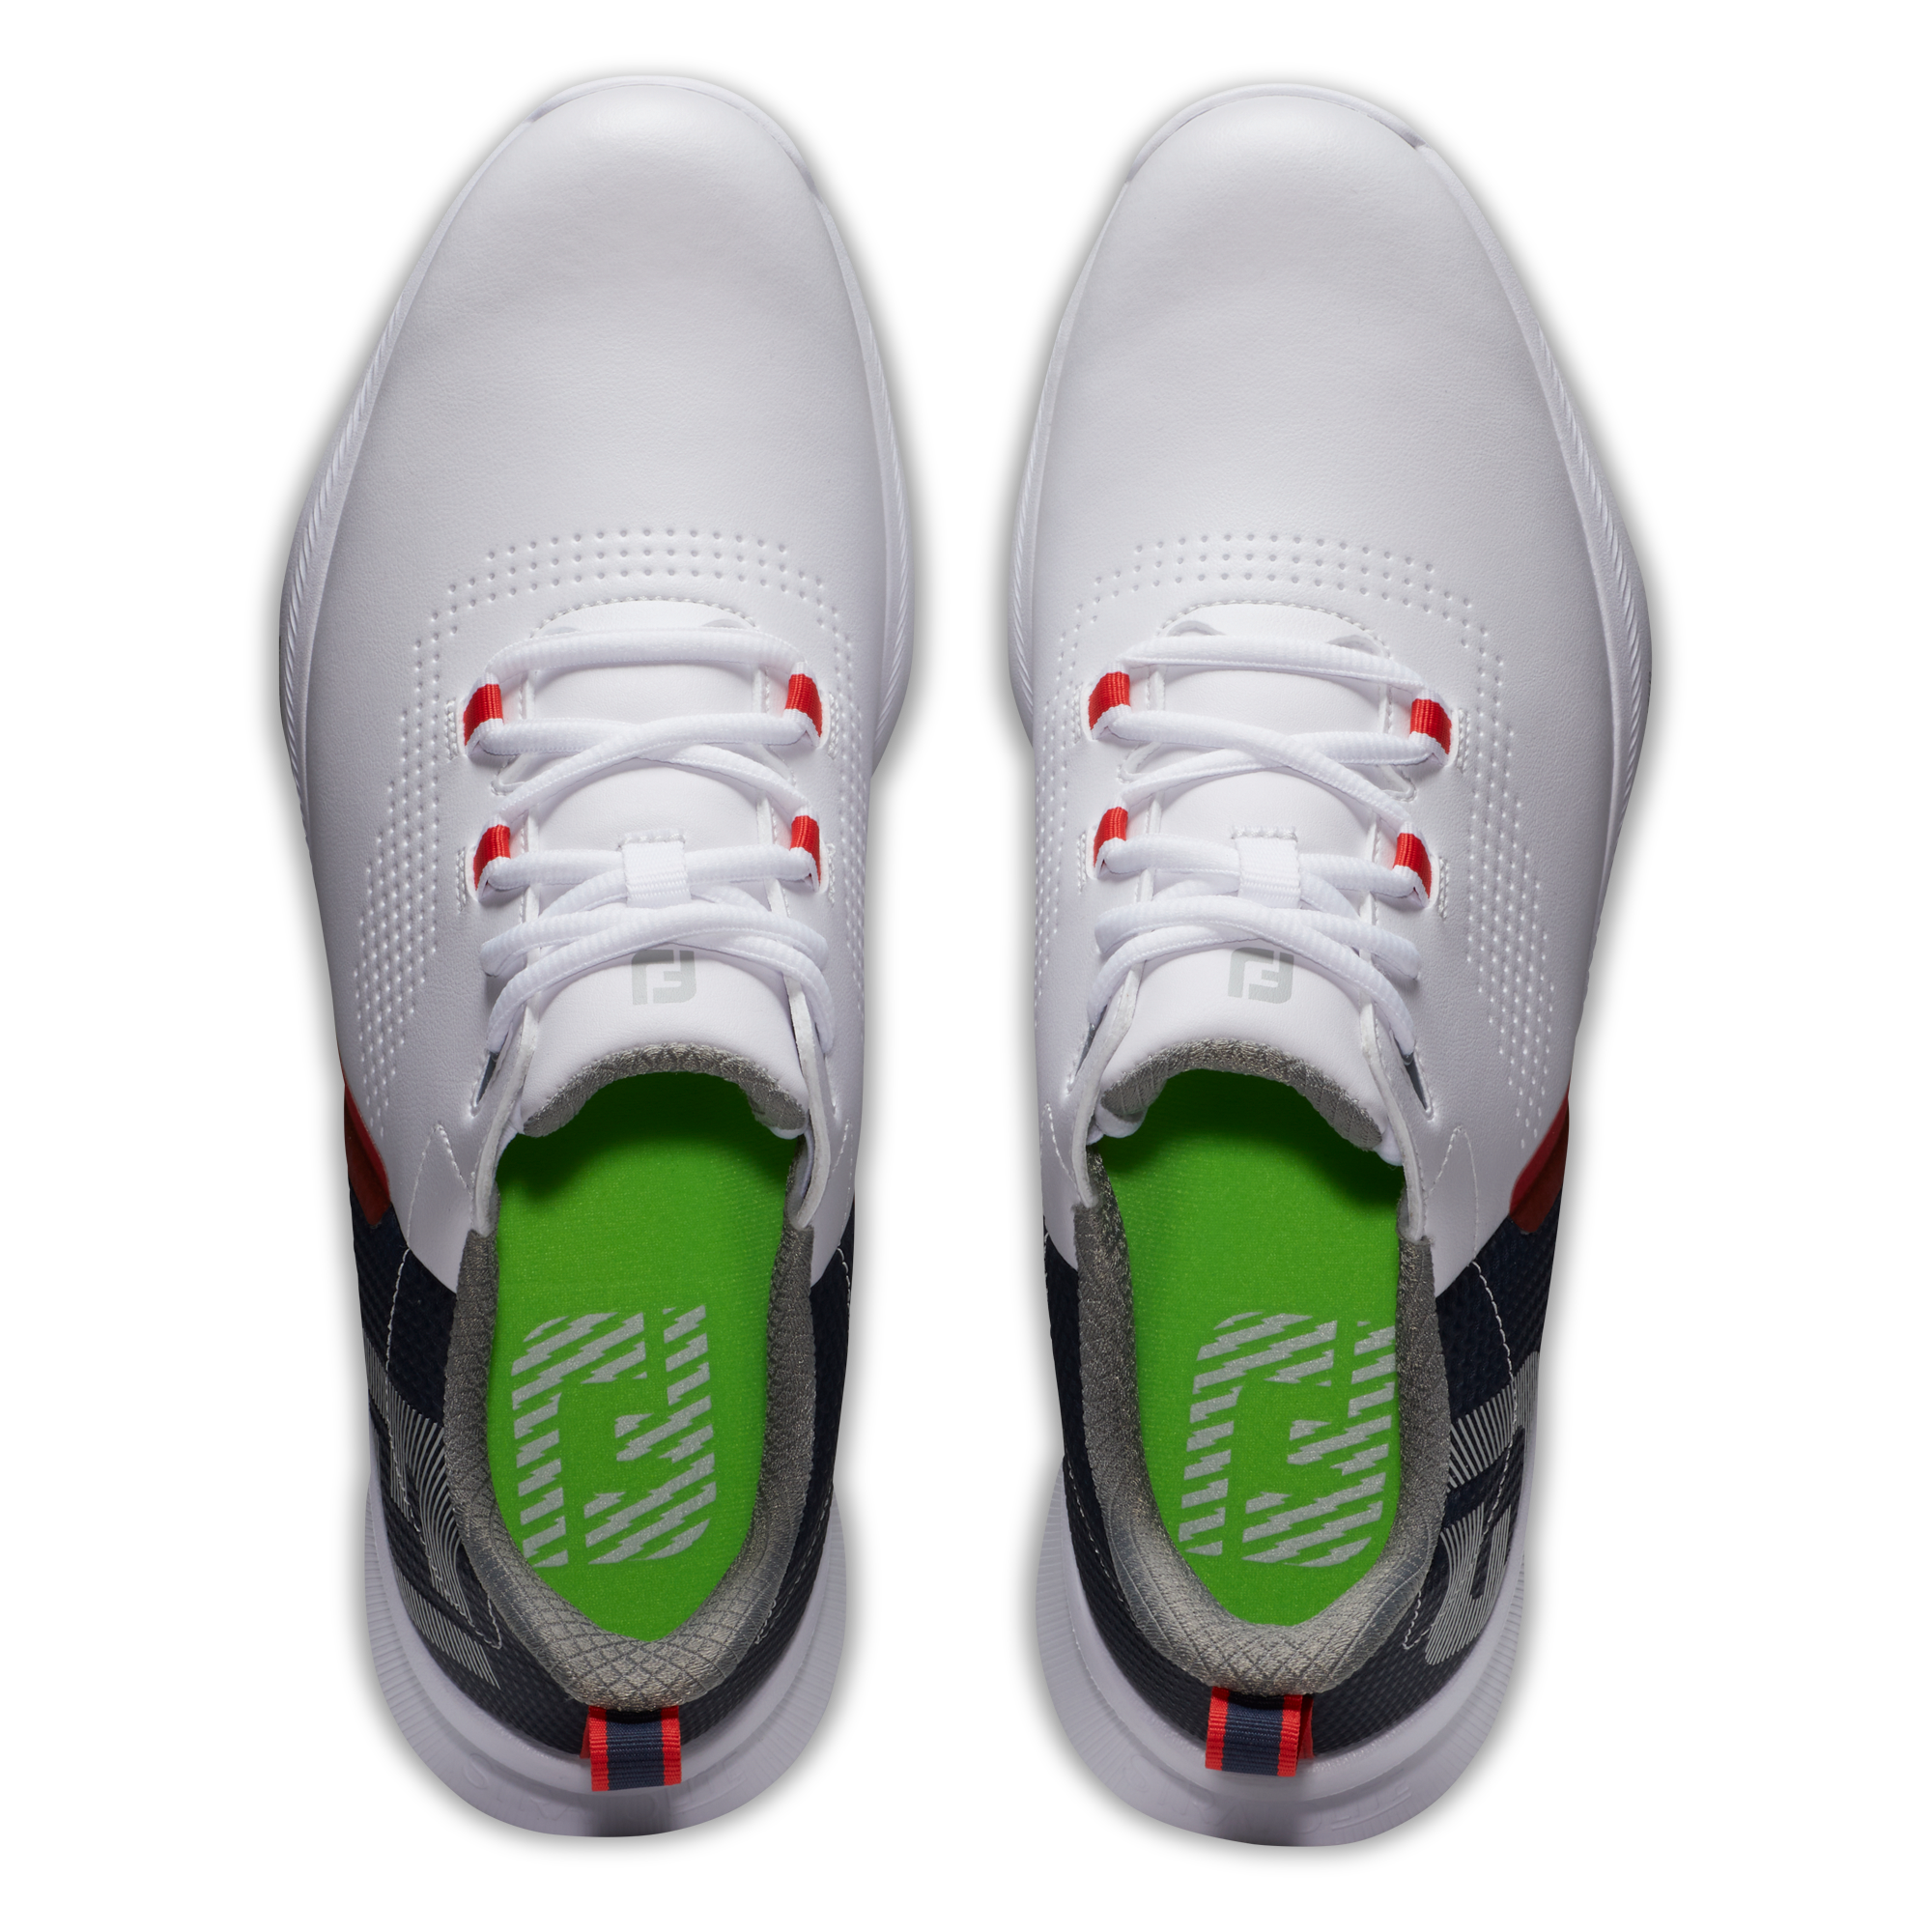 FJ Fuel | Spikeless Golf Shoes for Men | FootJoy UK